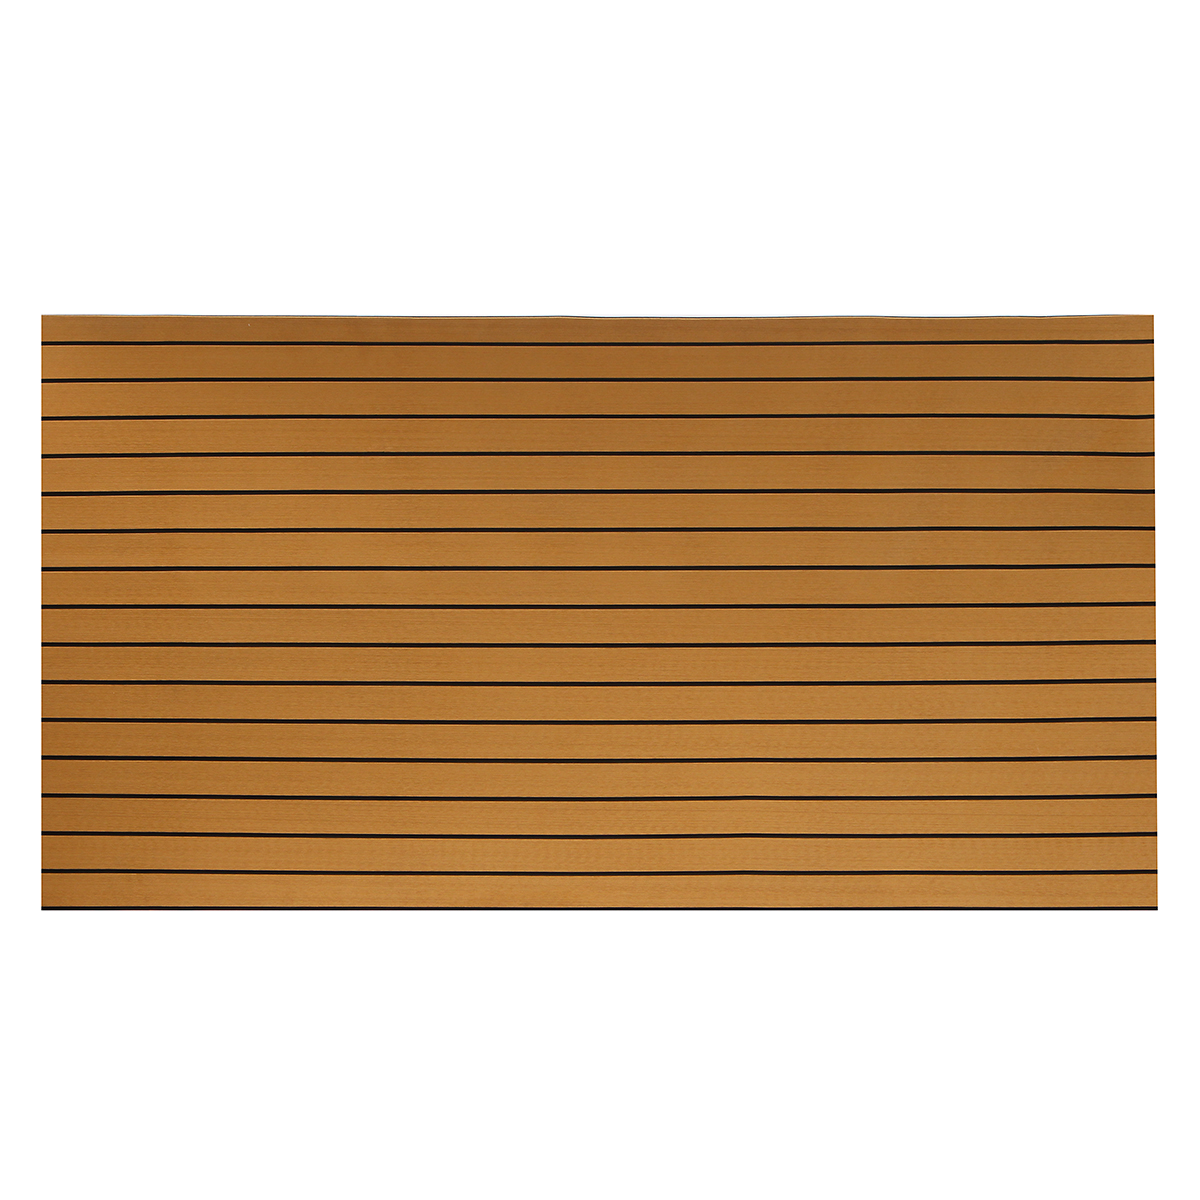 900x2400x6mm Self-Adhesive Gold With Black Lines Marine Flooring Faux Teak EVA Foam Boat Decking Sheet